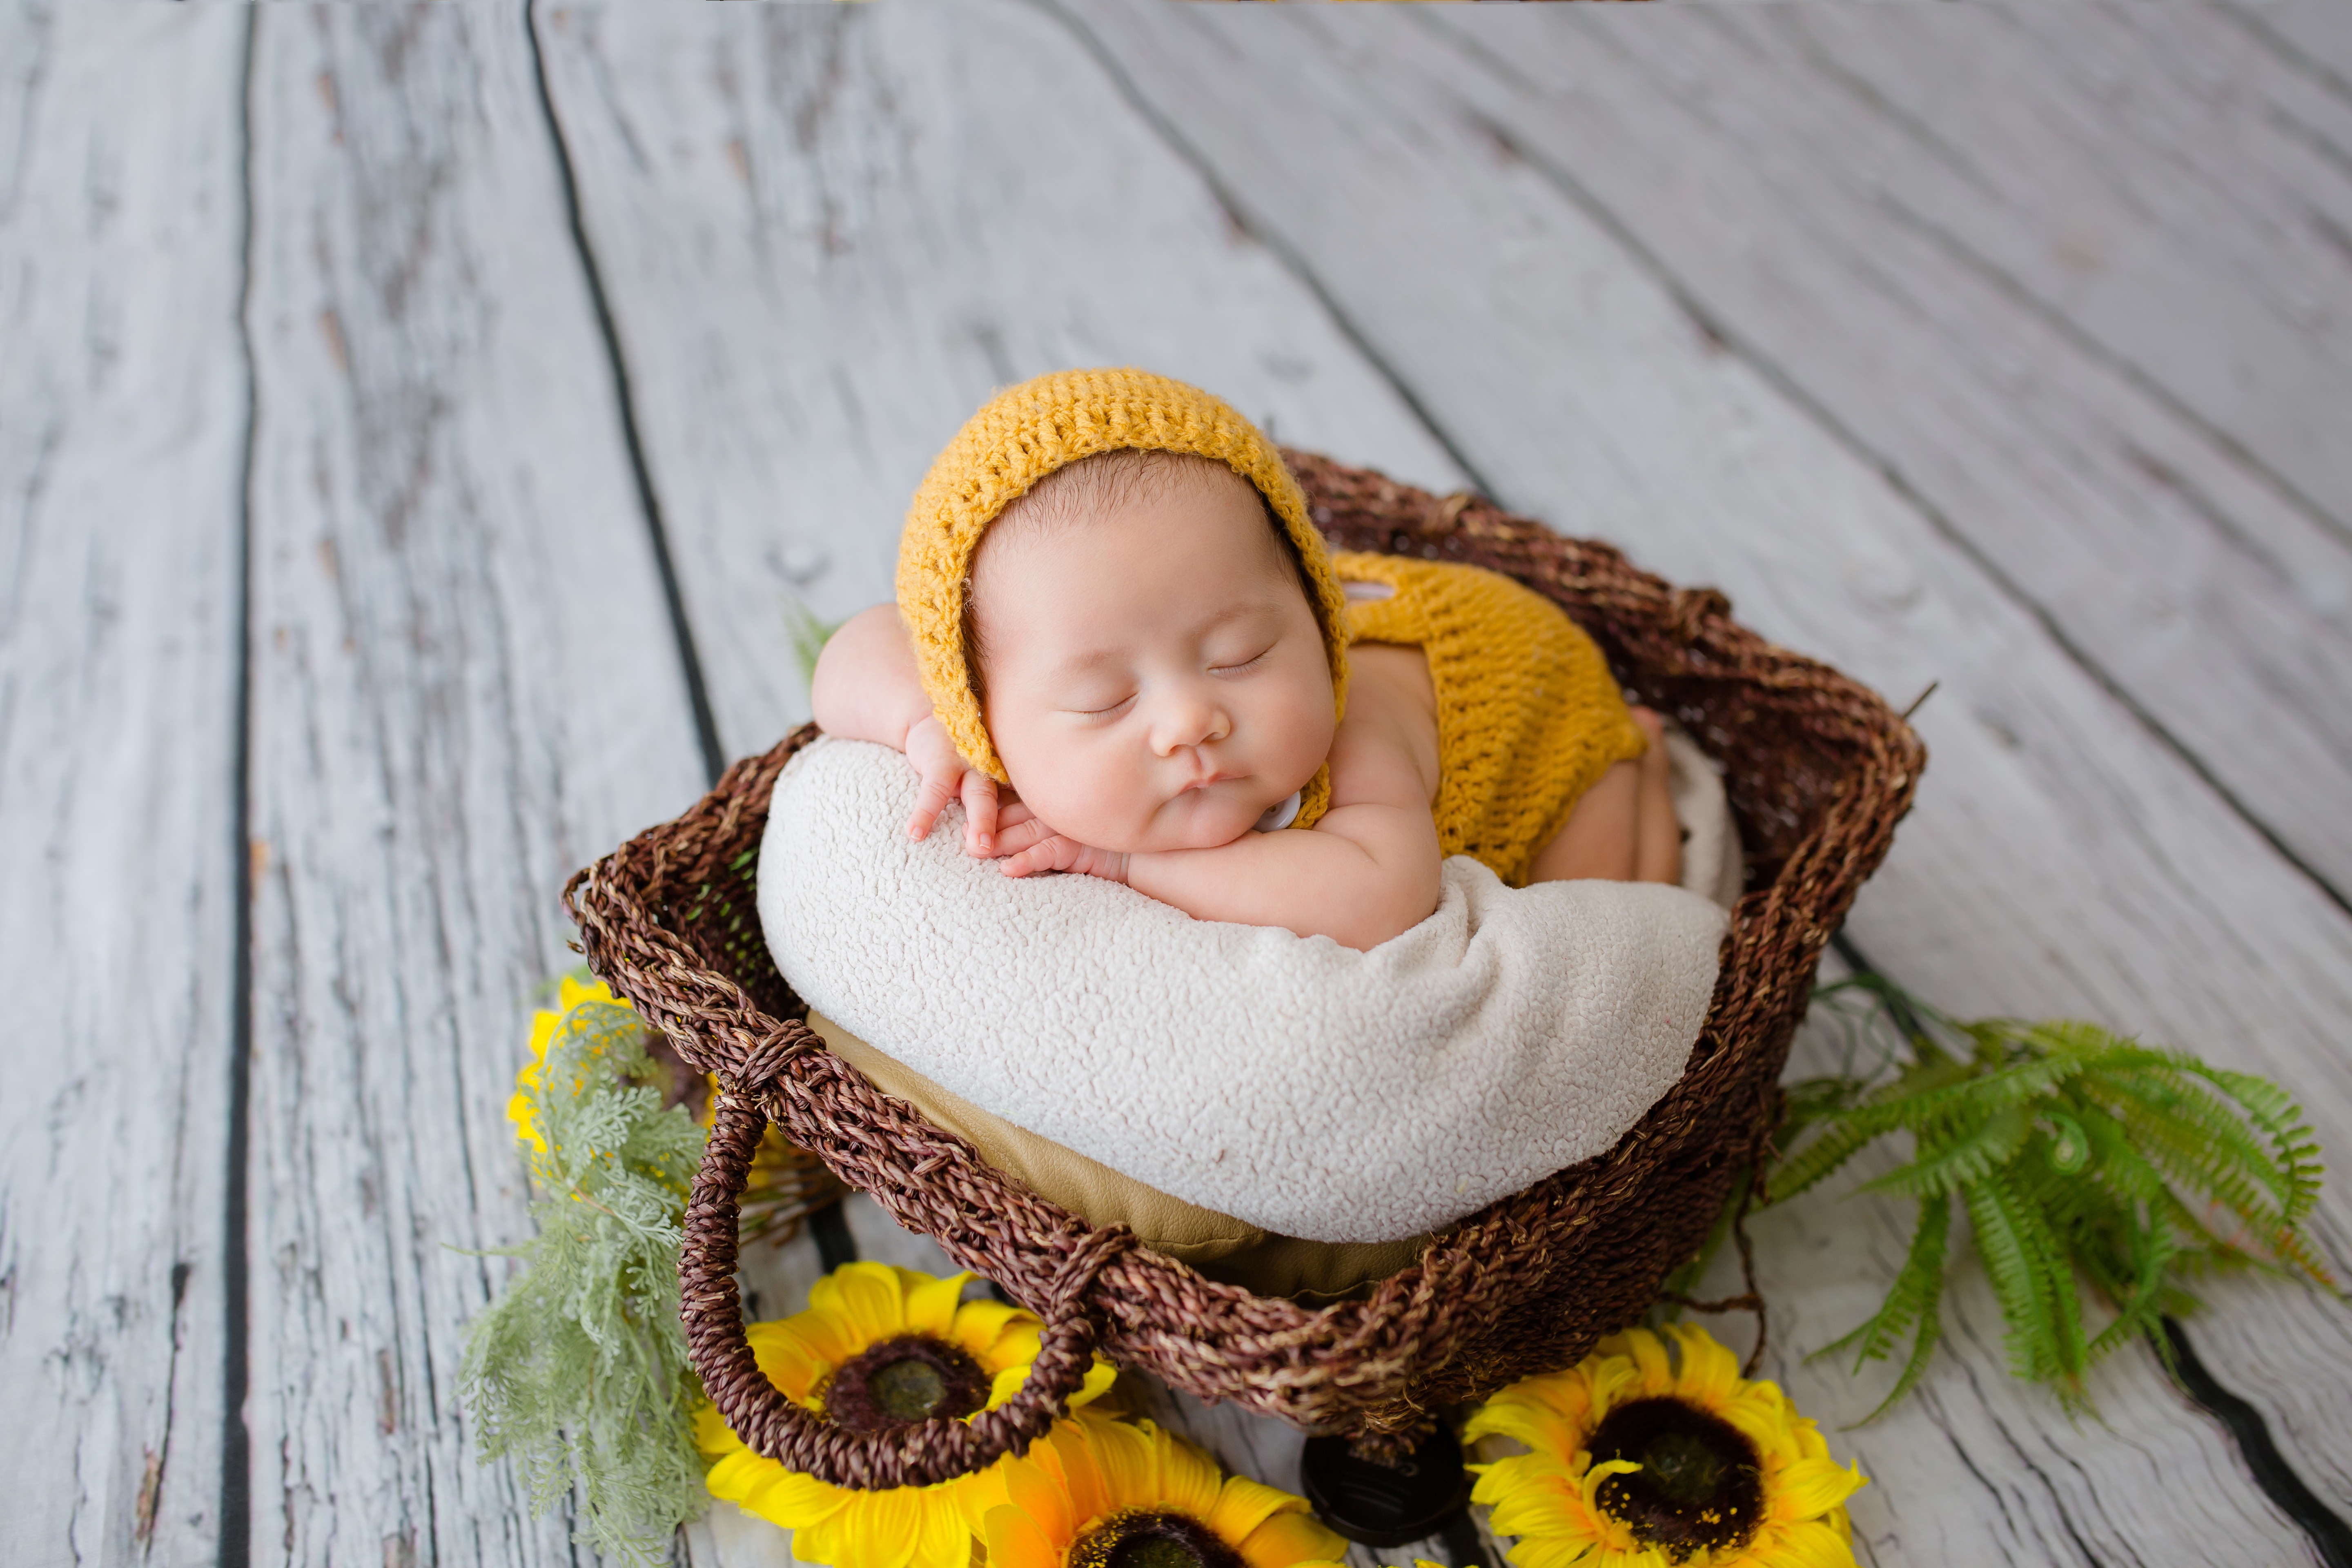 HD wallpaper, Newborn, Basket, Sunflowers, Cute Baby, Yellow Dress, Wooden Floor, Green Leaves, 5K, Crochet Baby Costume, Sleeping Baby